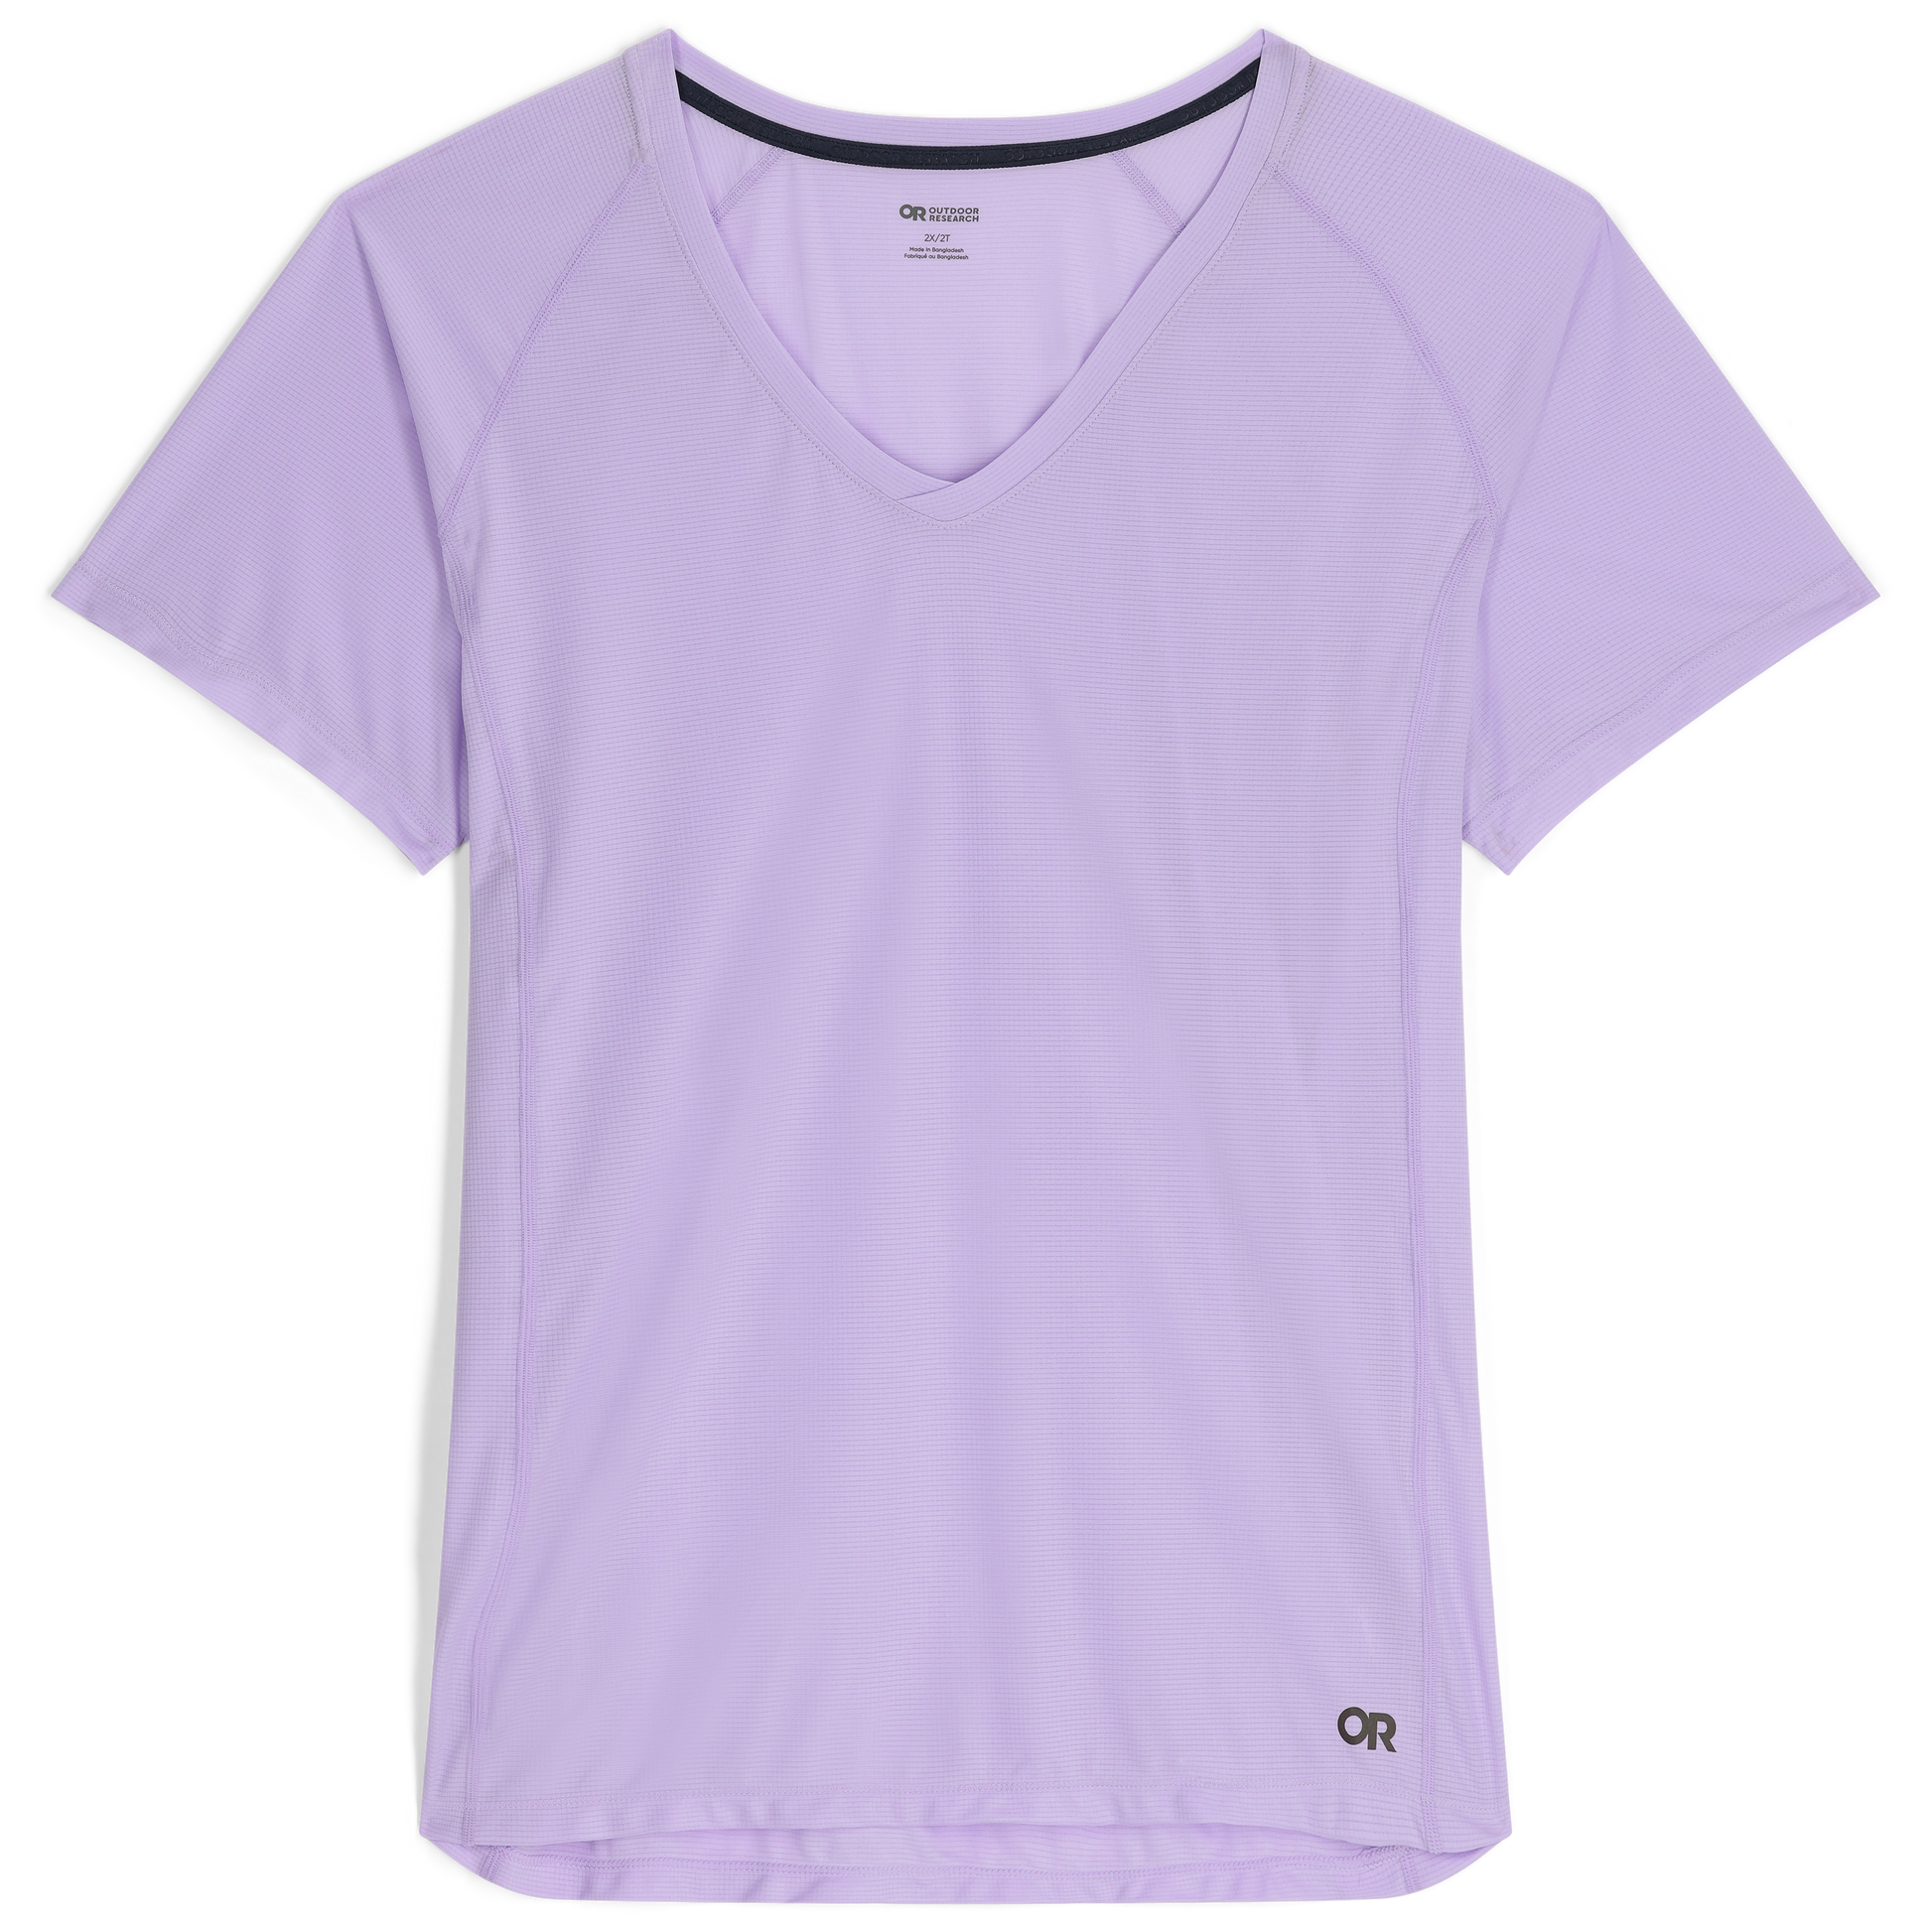 Tee-shirt respirant femme ECHO WOMAN rhubarb Outdoor Research - Montania  Sport